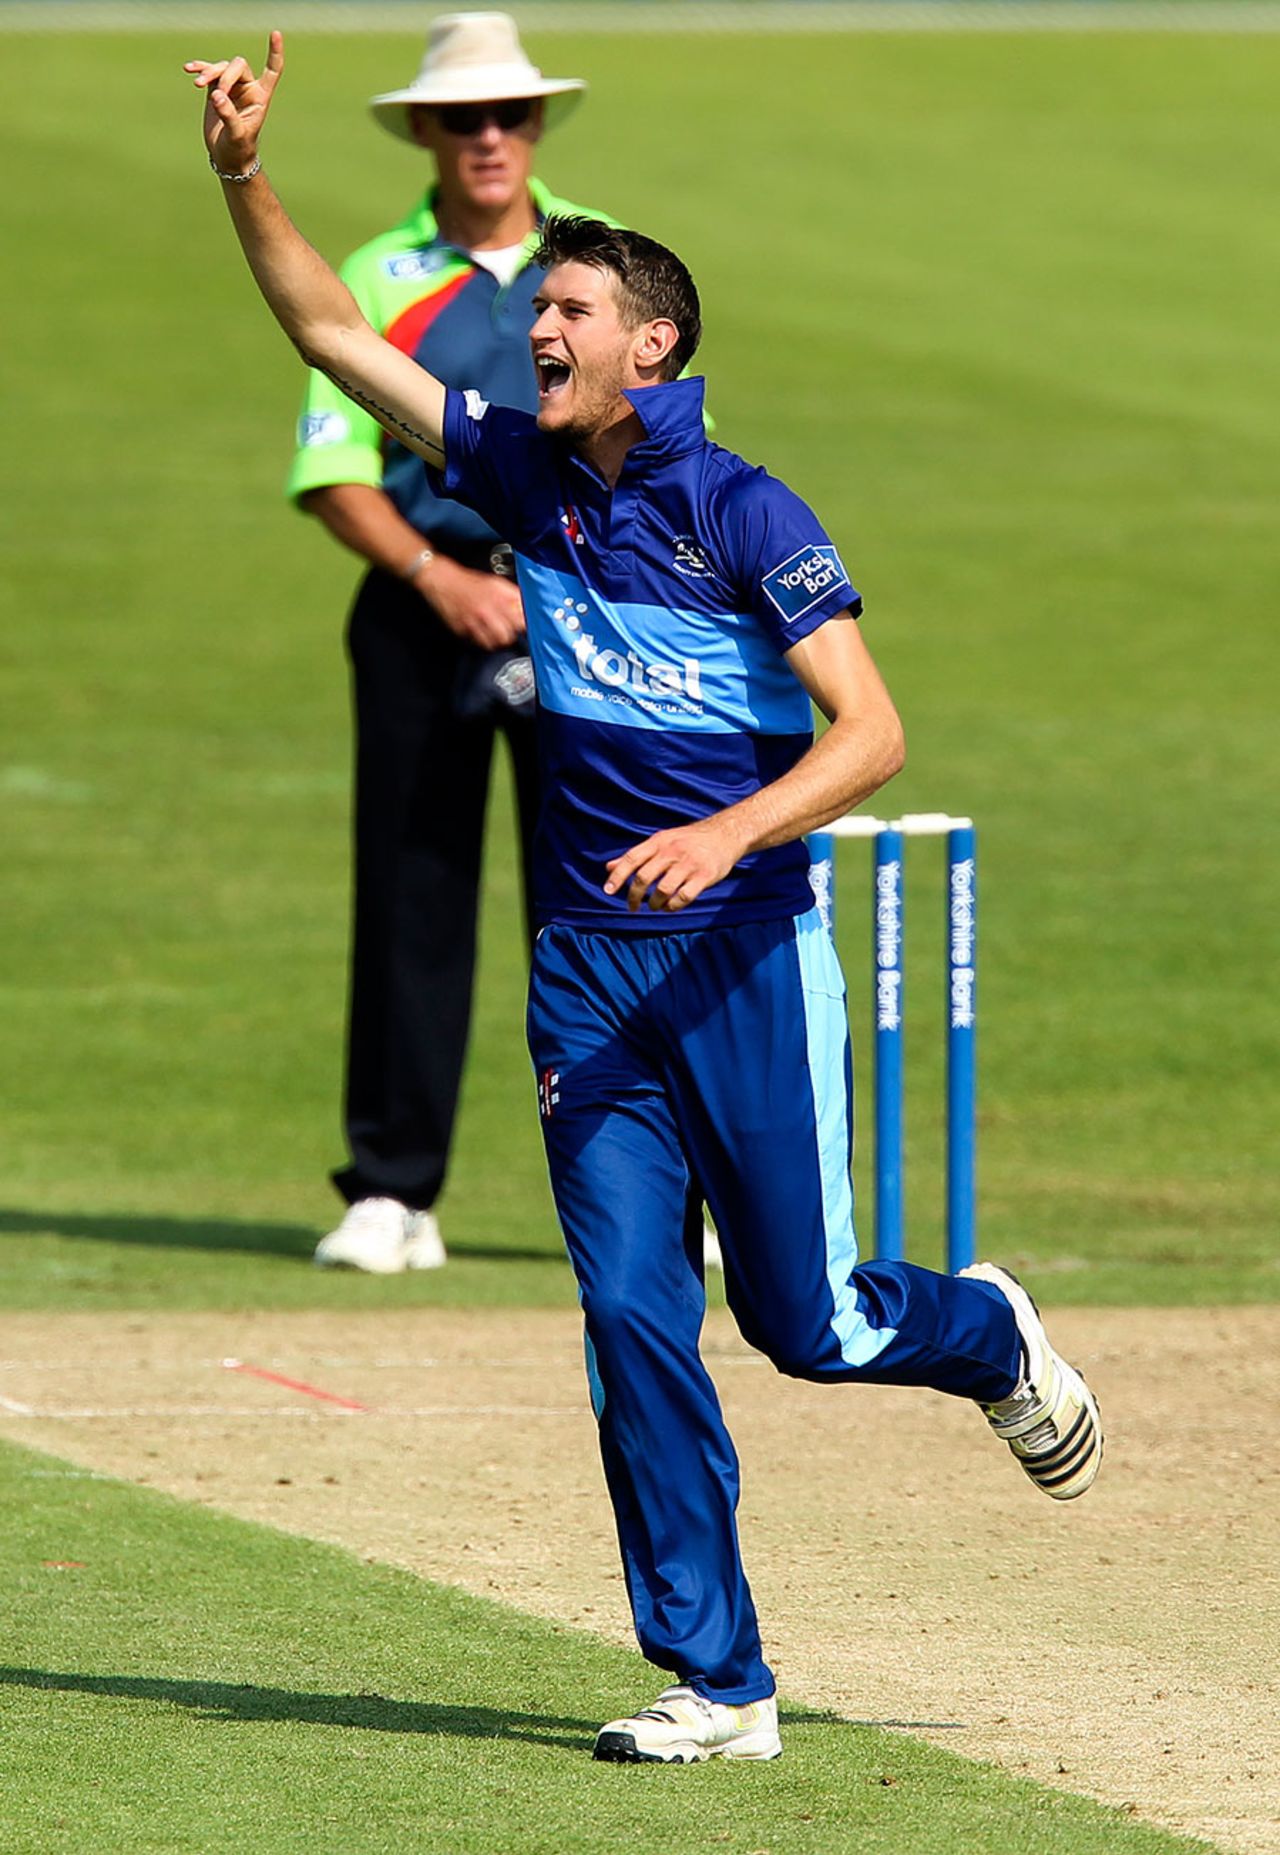 David Payne celebrates a wicket, Bristol, August 26, 2013